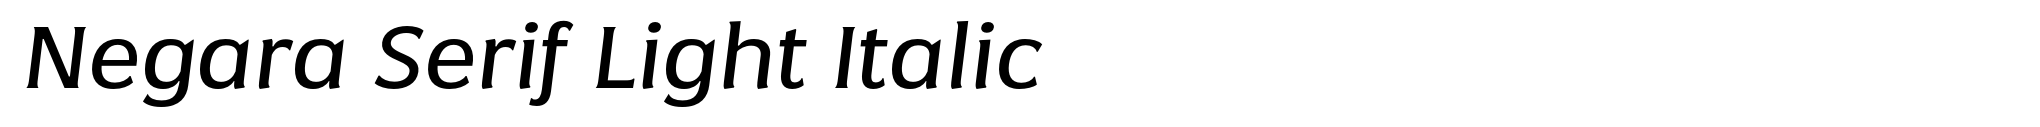 Negara Serif Light Italic image